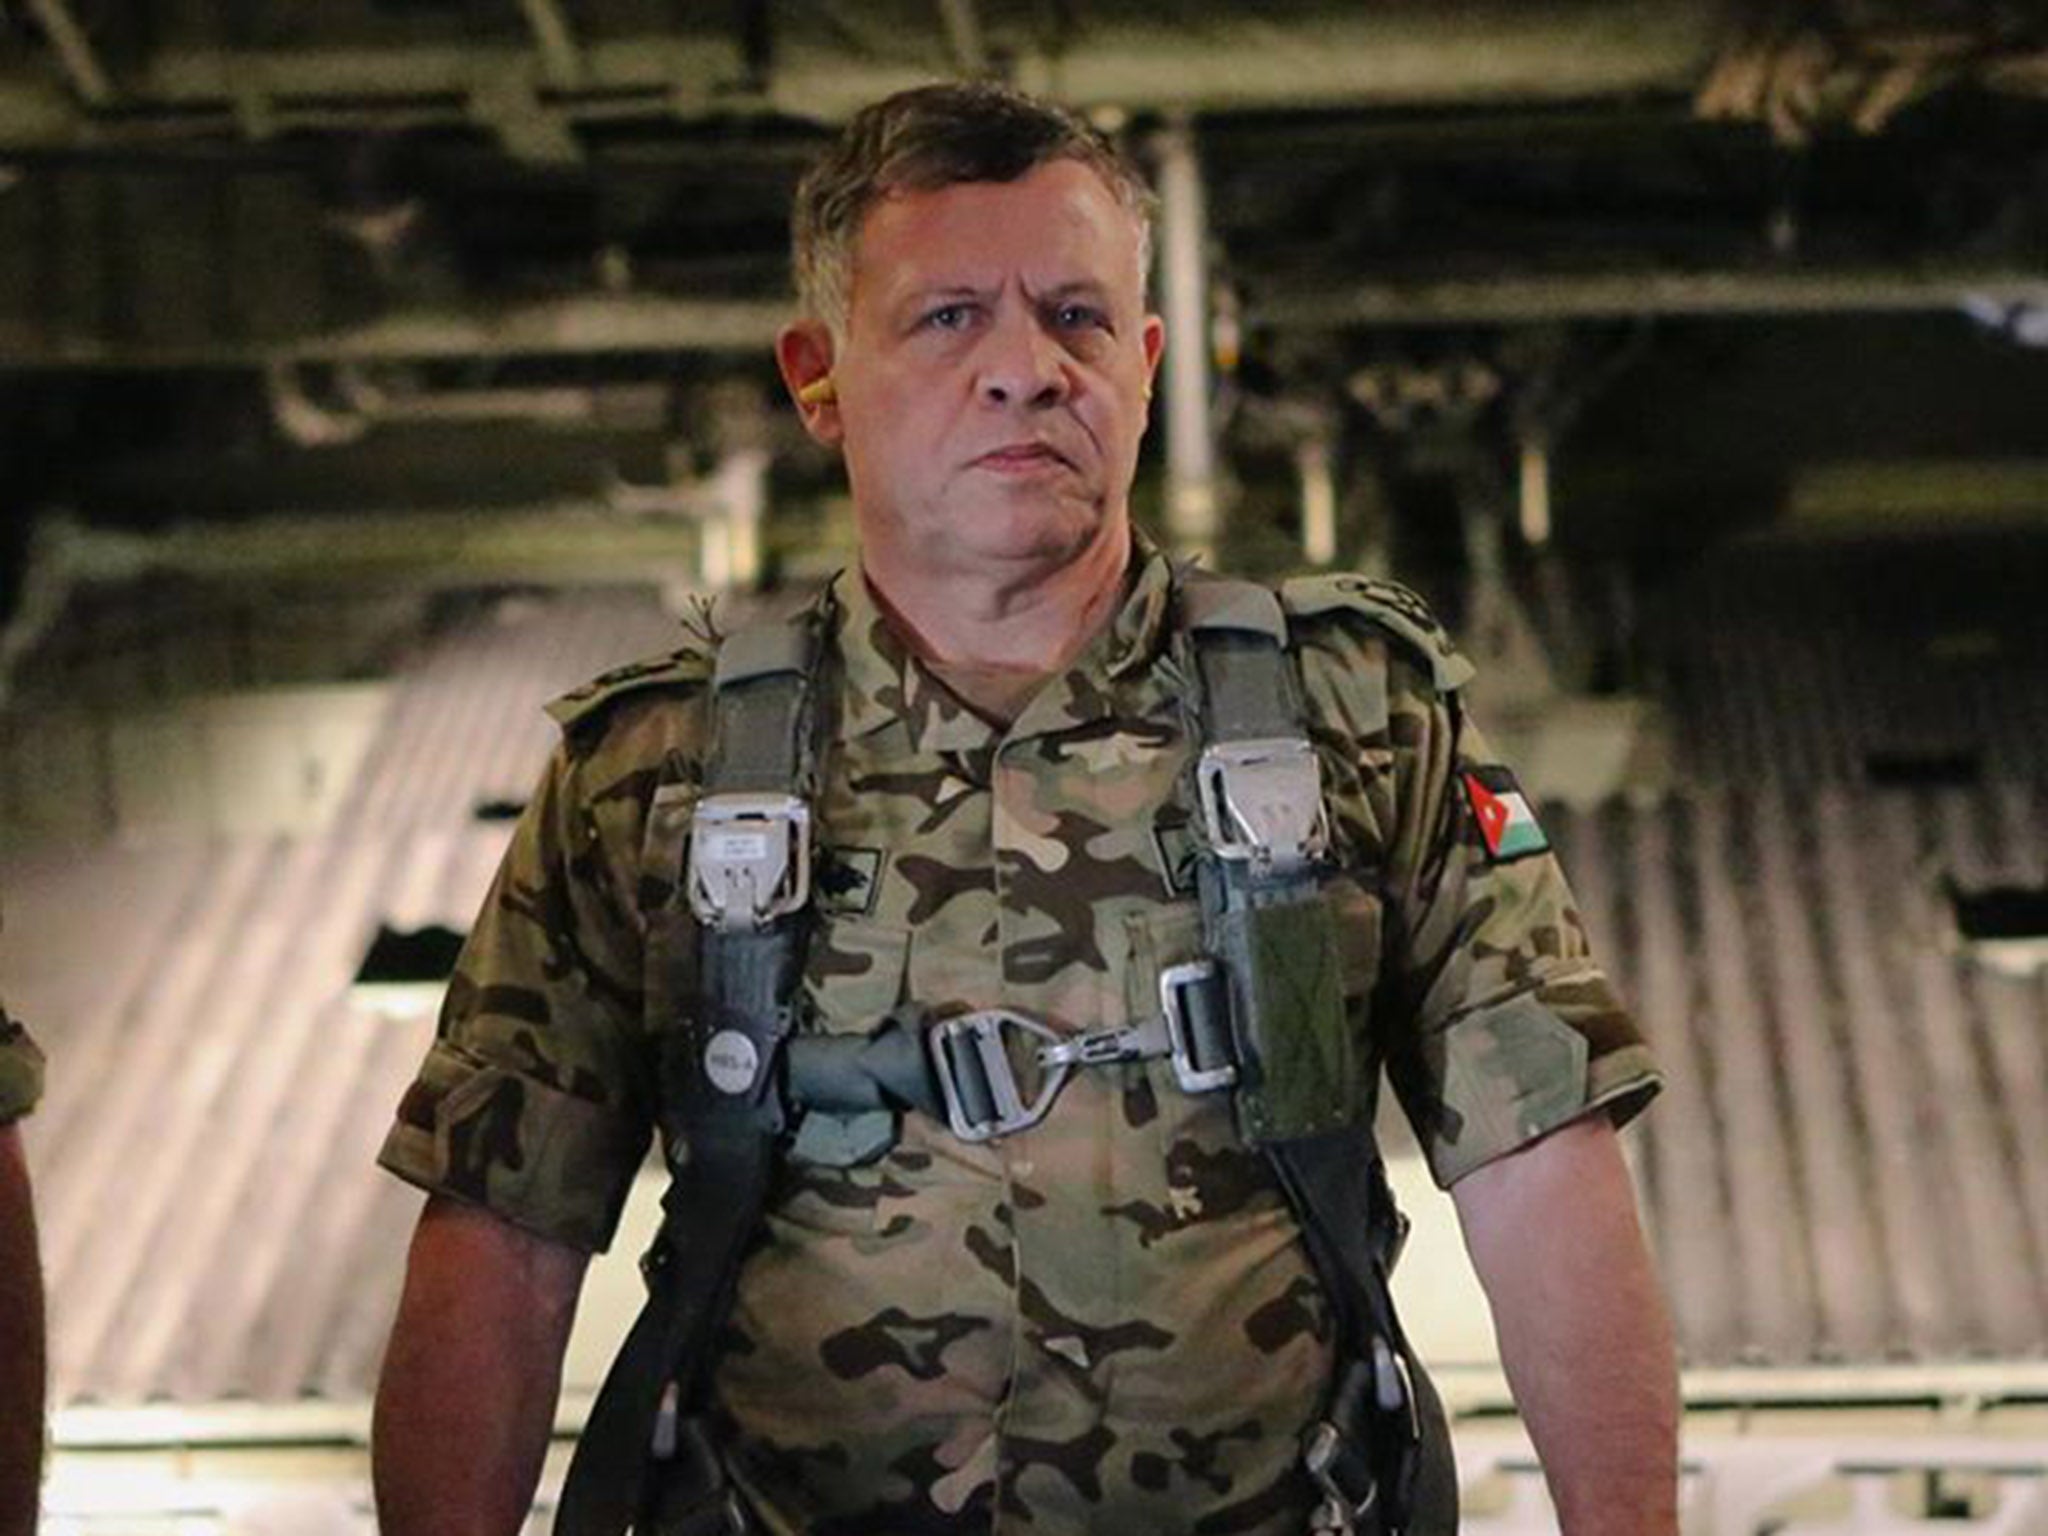 King Abdullah of Jordan has been pictured in military gear